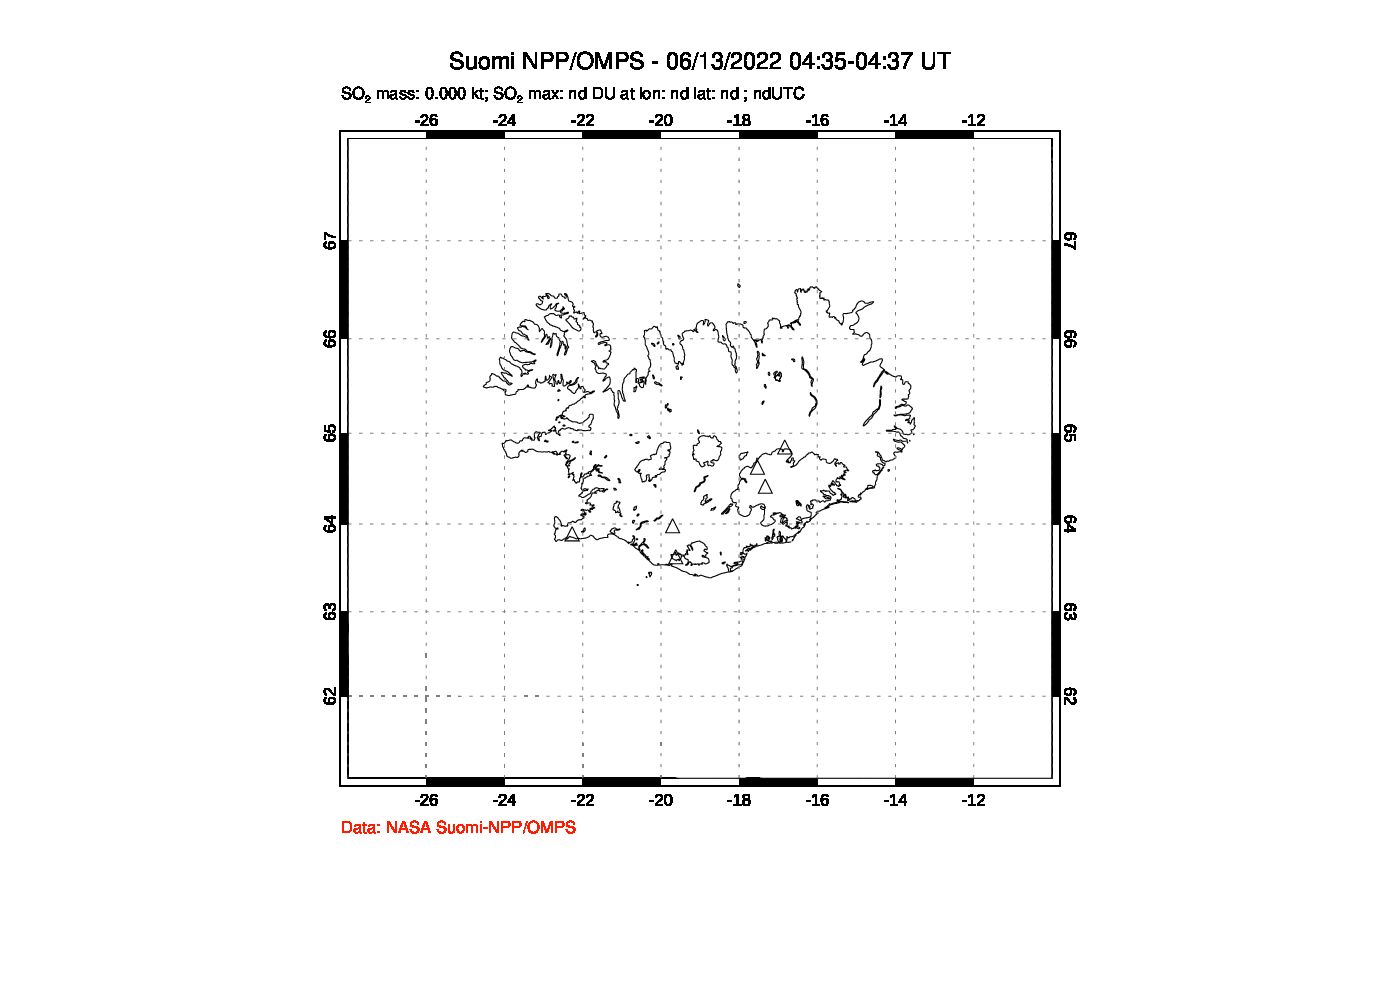 A sulfur dioxide image over Iceland on Jun 13, 2022.